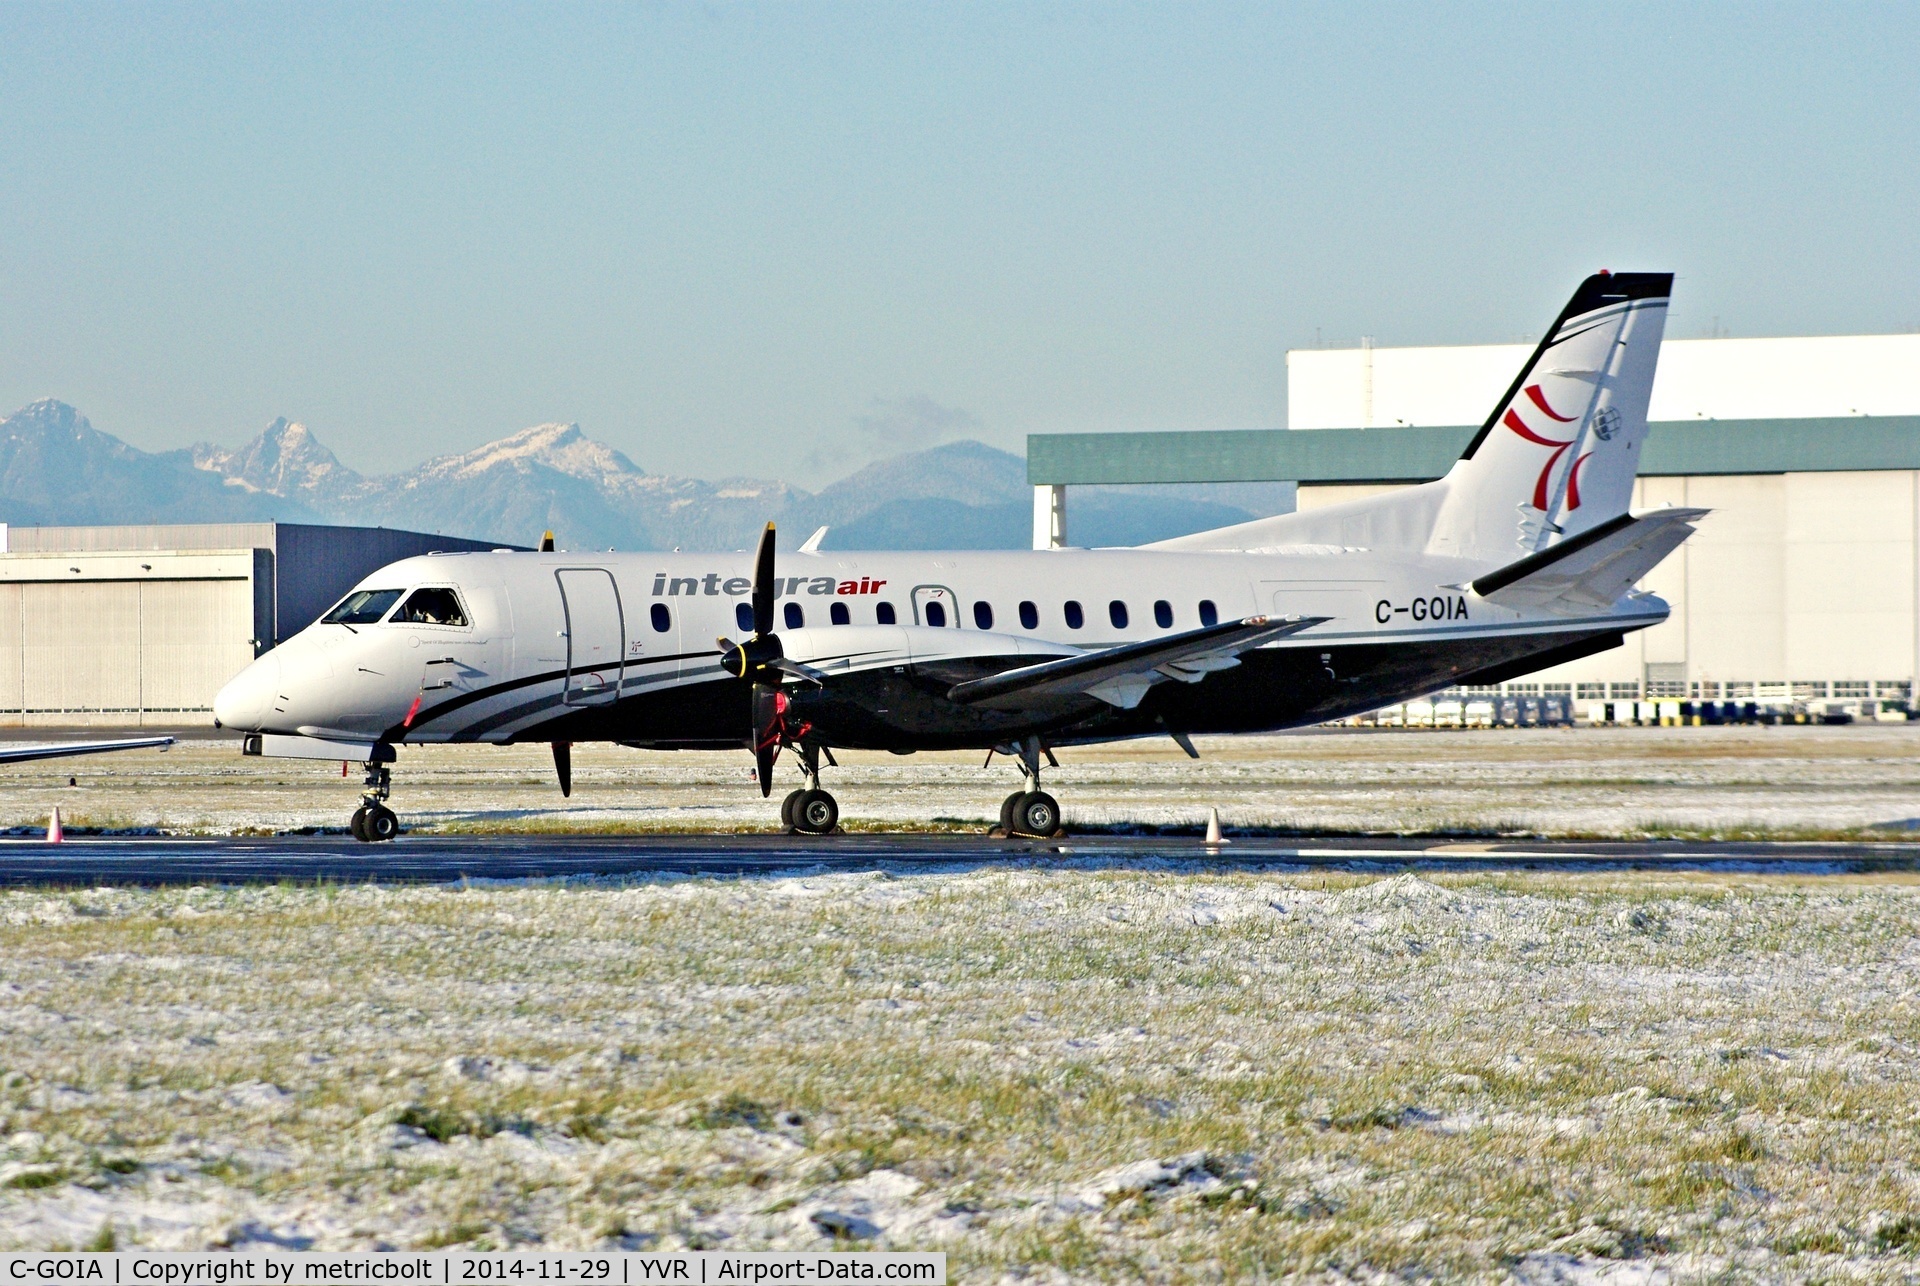 C-GOIA, 1993 Saab 340B C/N 340B-347, now with Integra Air